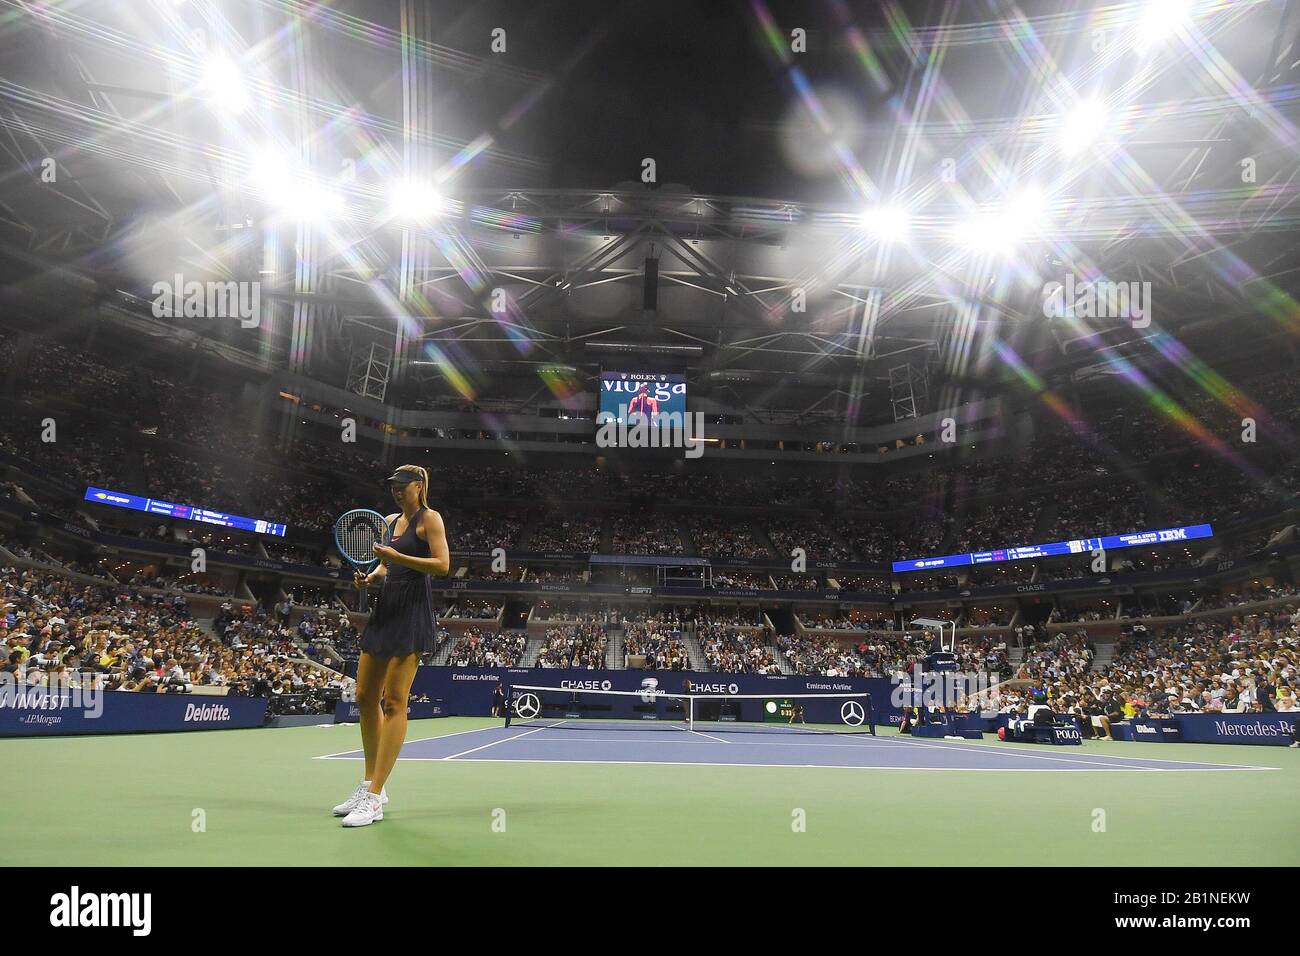 Rinçage Meadows New York US Open tennis 26/08/2019 Seul avec ses forts, Maria Sharapova pendant la défaite facile de Serena Williams (USA) 6-1,6-1 v Banque D'Images